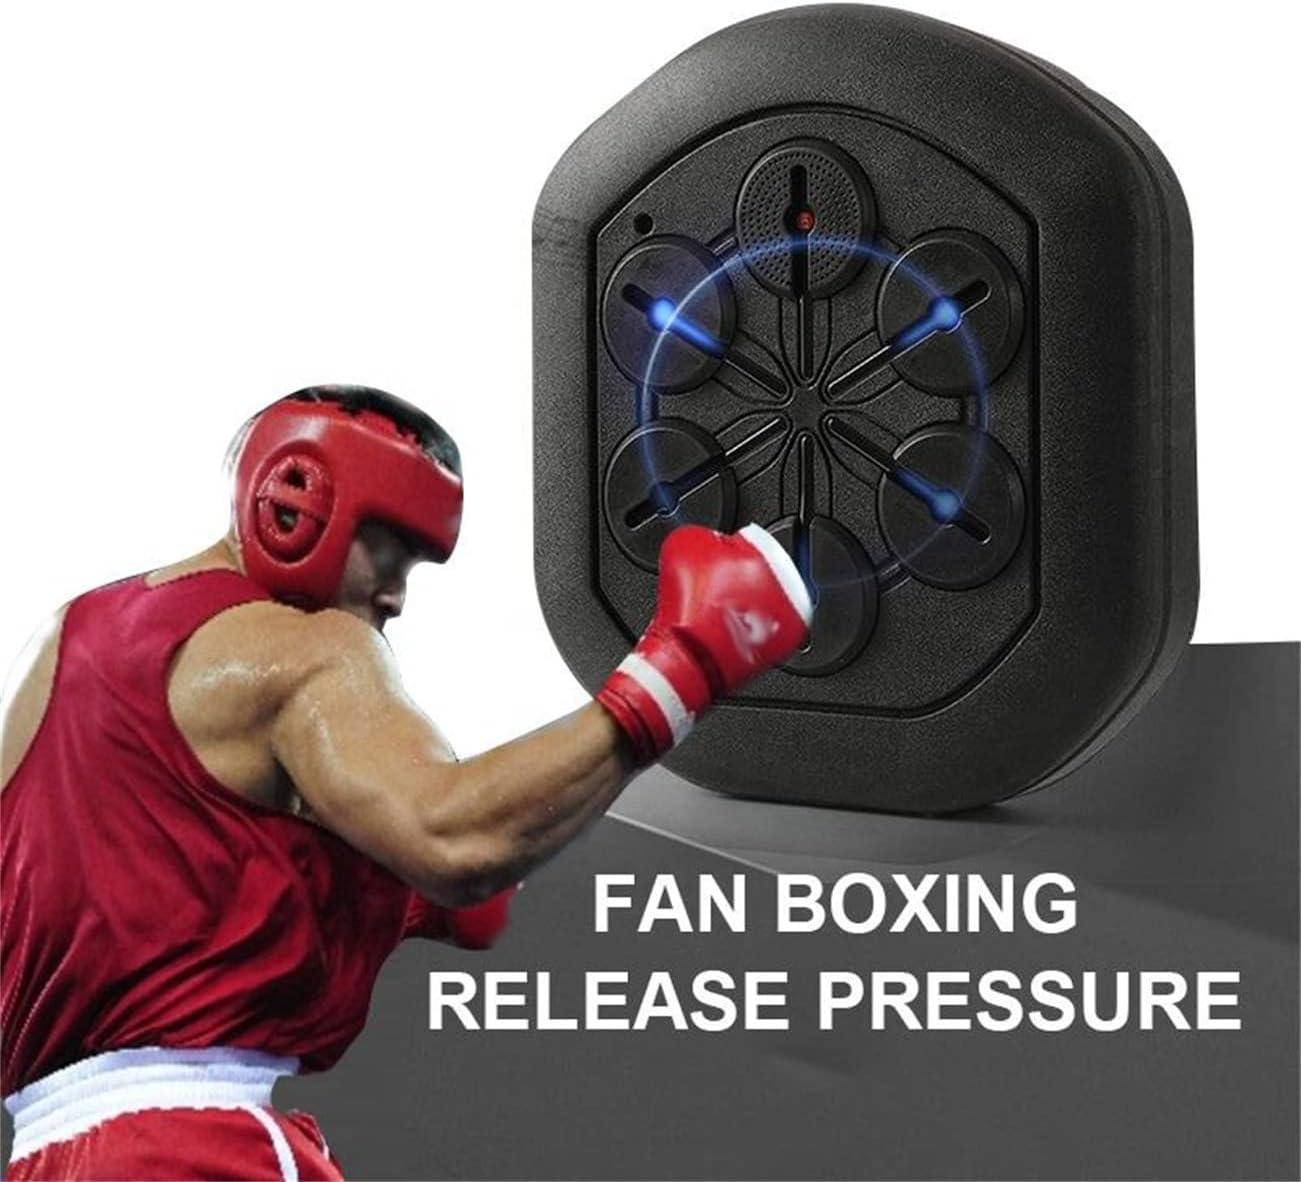 Boxing Sports Smart Music Boxing Machine Reaction Training Home